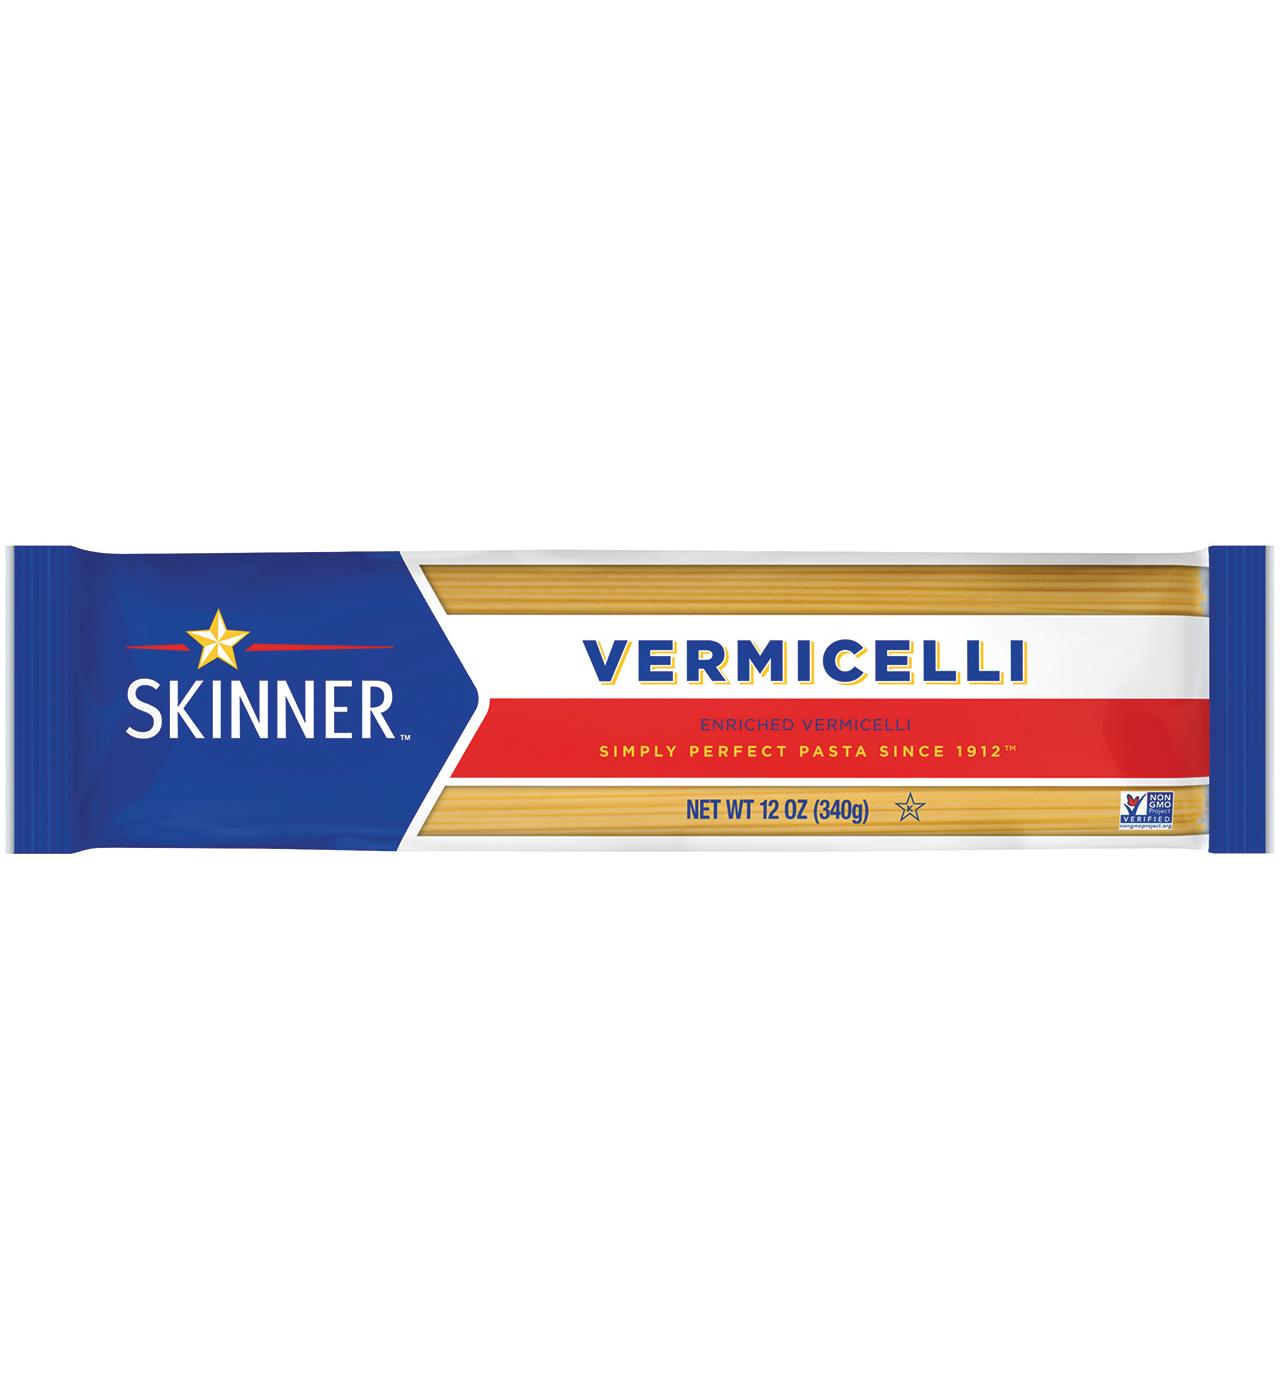 Skinner Vermicelli; image 1 of 2